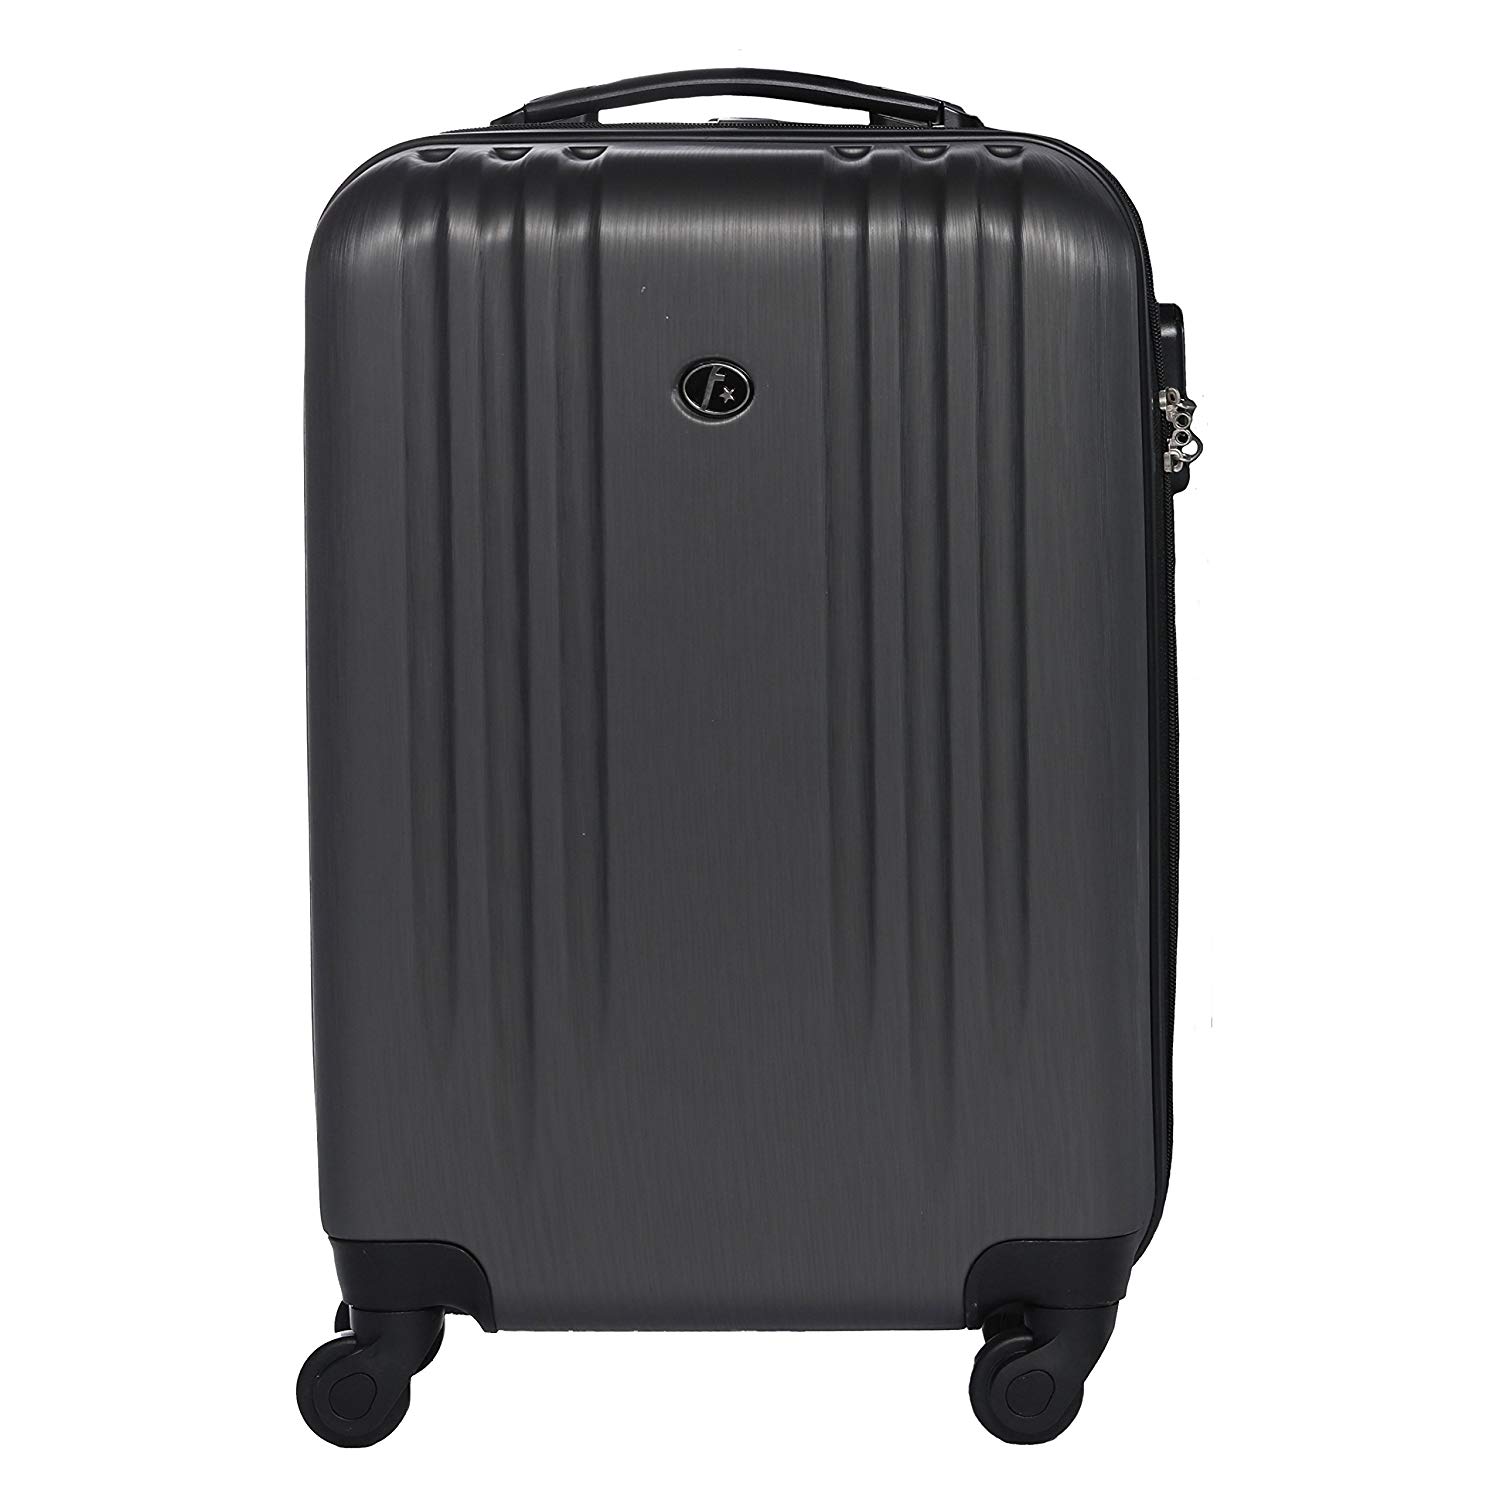 FERGÉ Handgepäck-Koffer leicht Marseille Bordgepäck-Koffer neu | Reisekoffer Kabinentrolley - 4 Rollen (360°) Hartschale grau